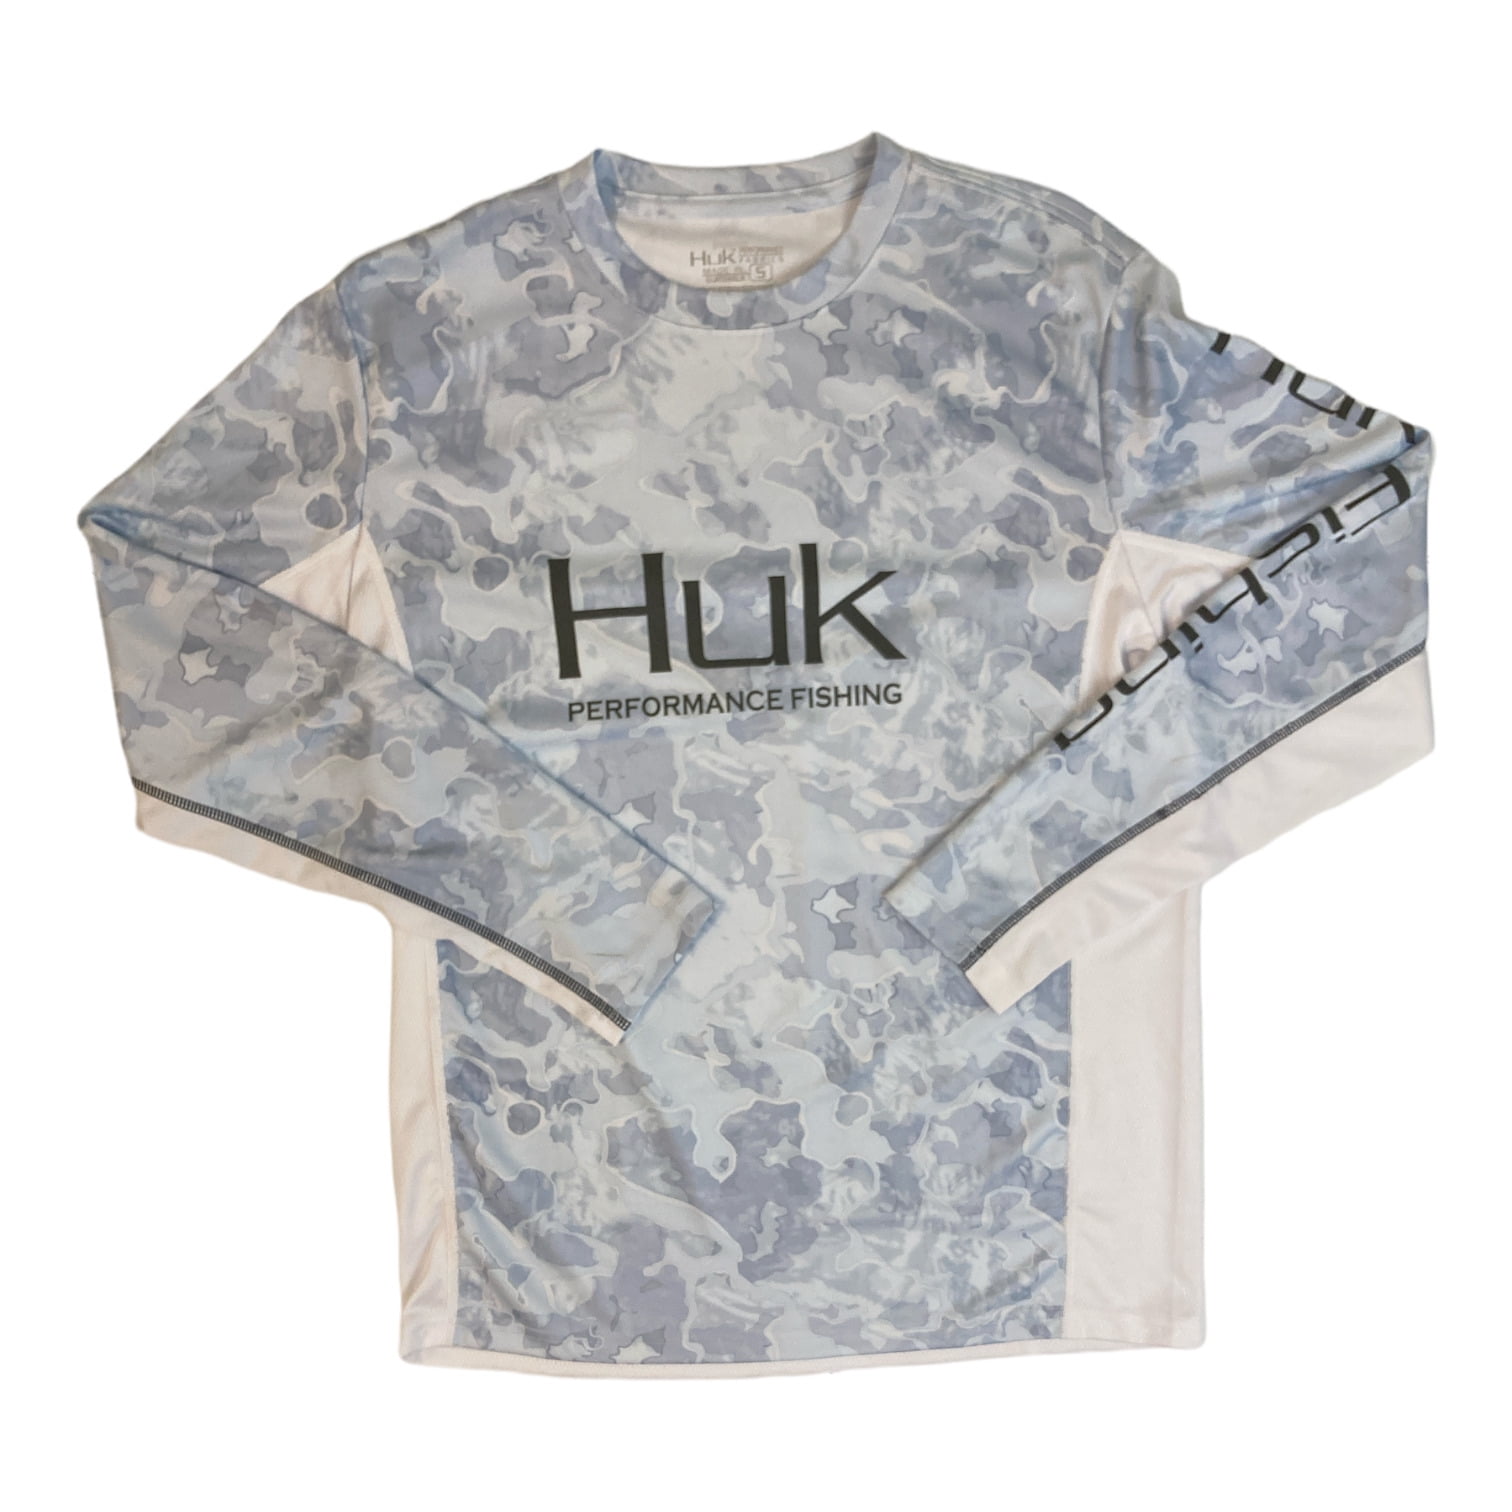 Huk Men's Icon X Performance Long Sleeve Fishing Shirt (Refraction